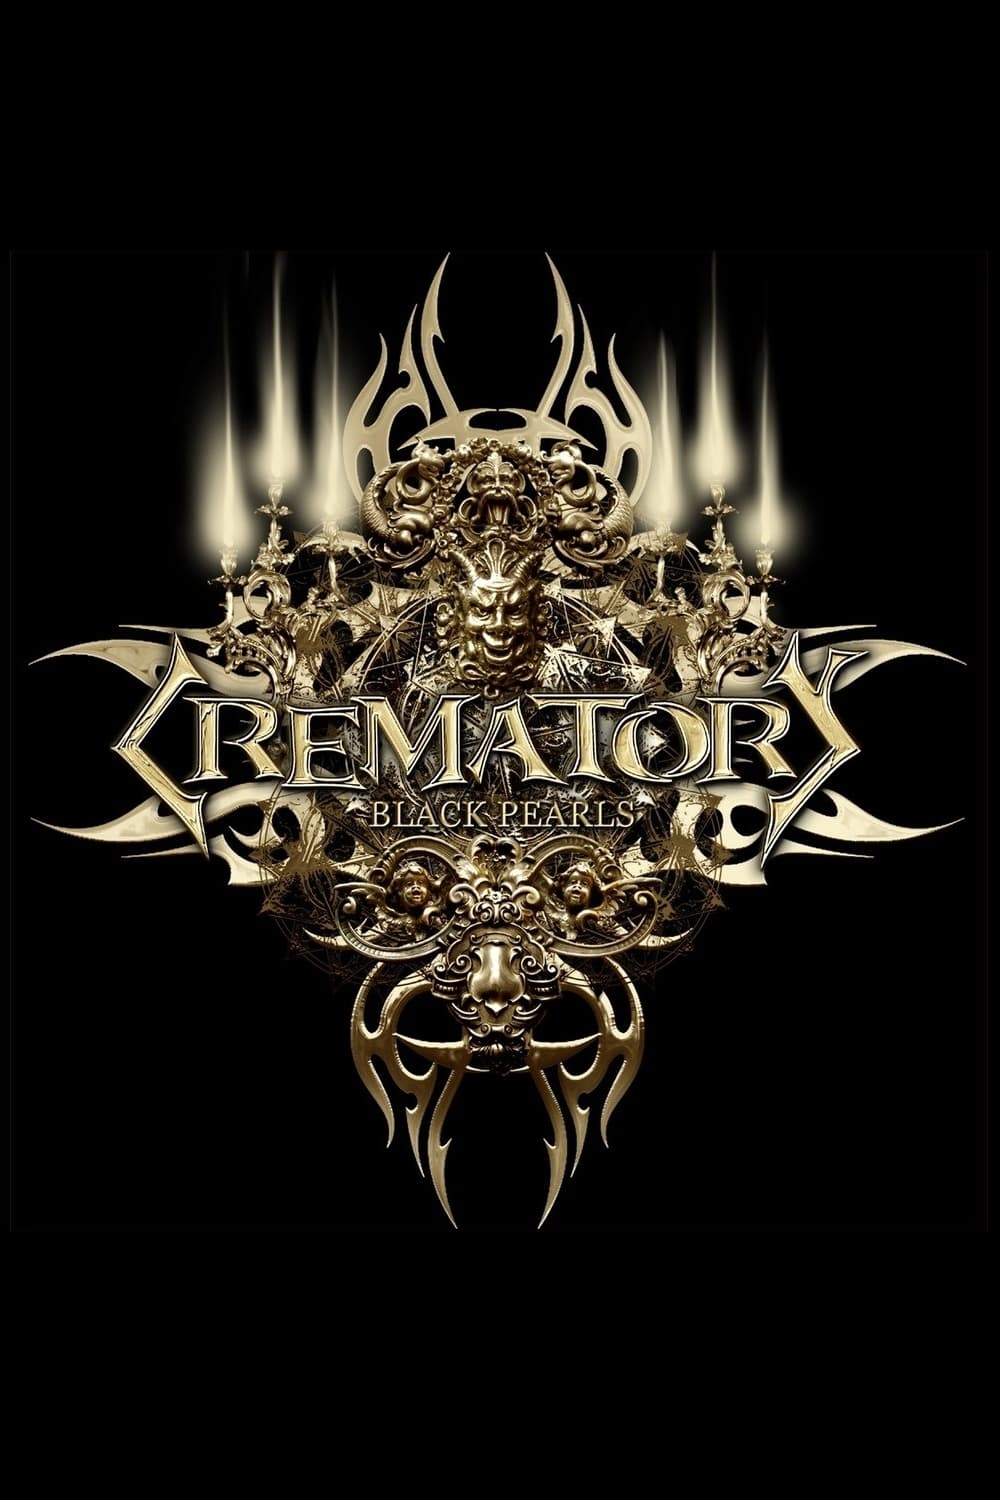 Crematory - Black Pearls (Bonus DVD)